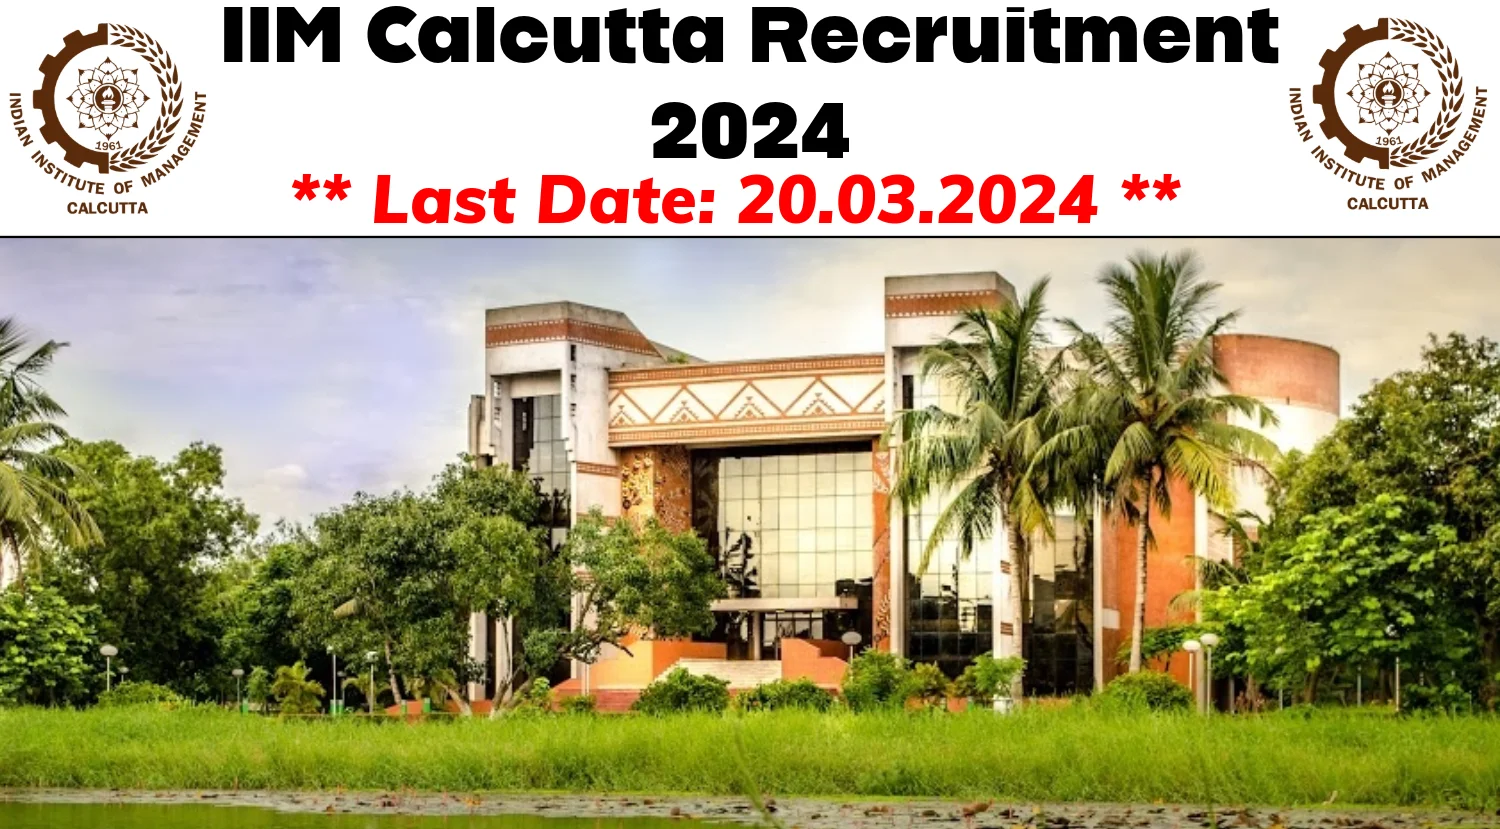 IIM Calcutta Recruitment 2024